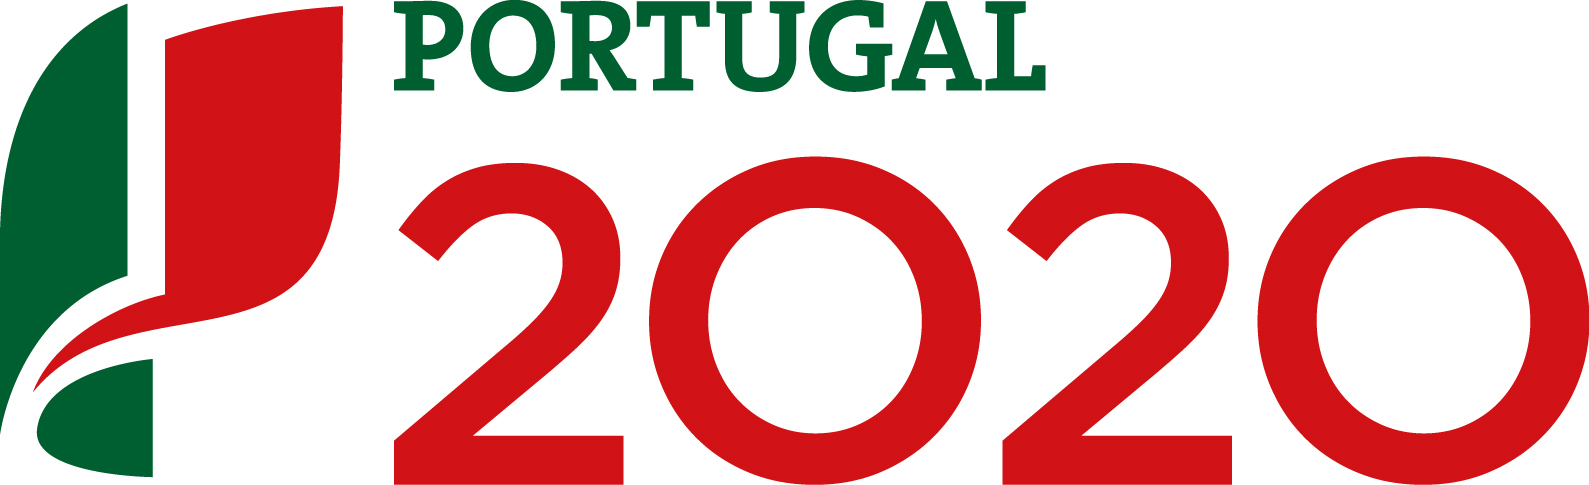 Logo Portugal 2020 Cores